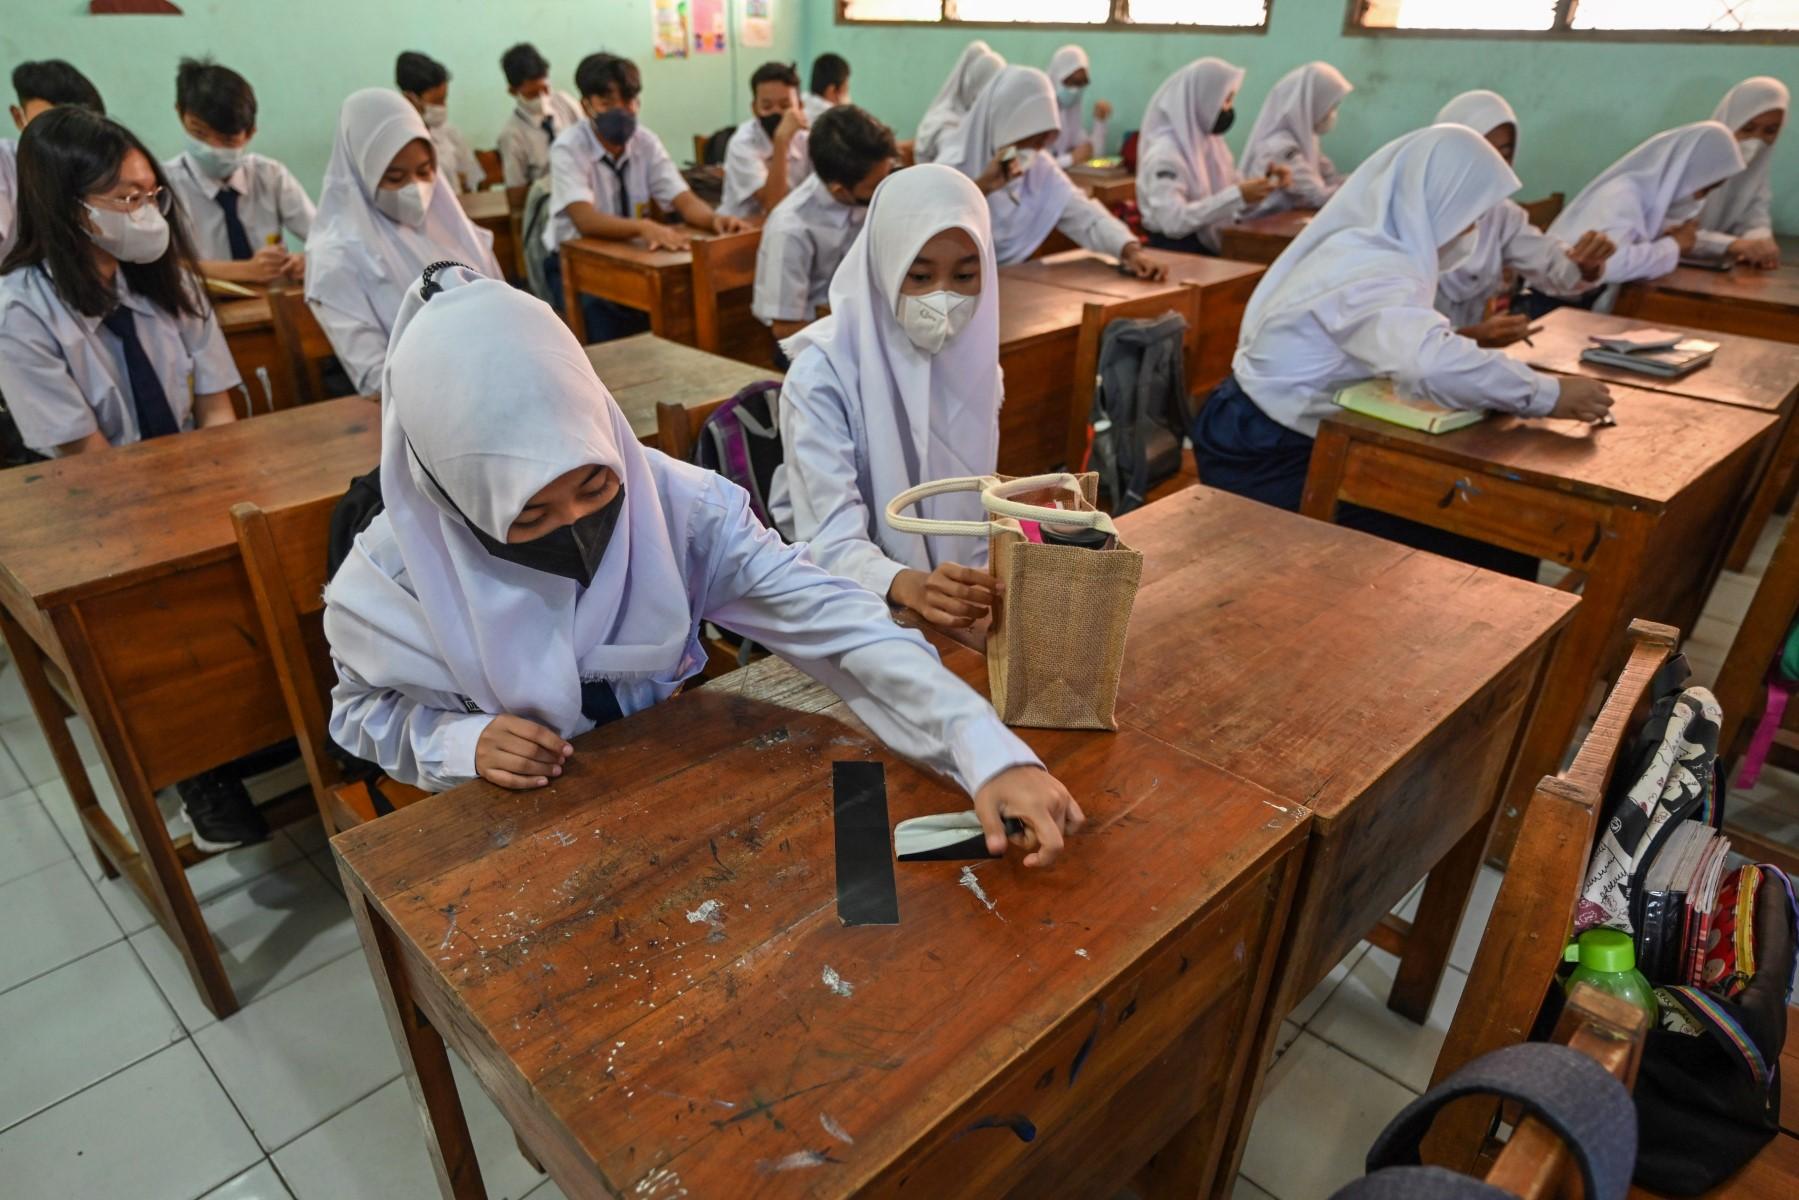 INDONESIA-EDUCATION